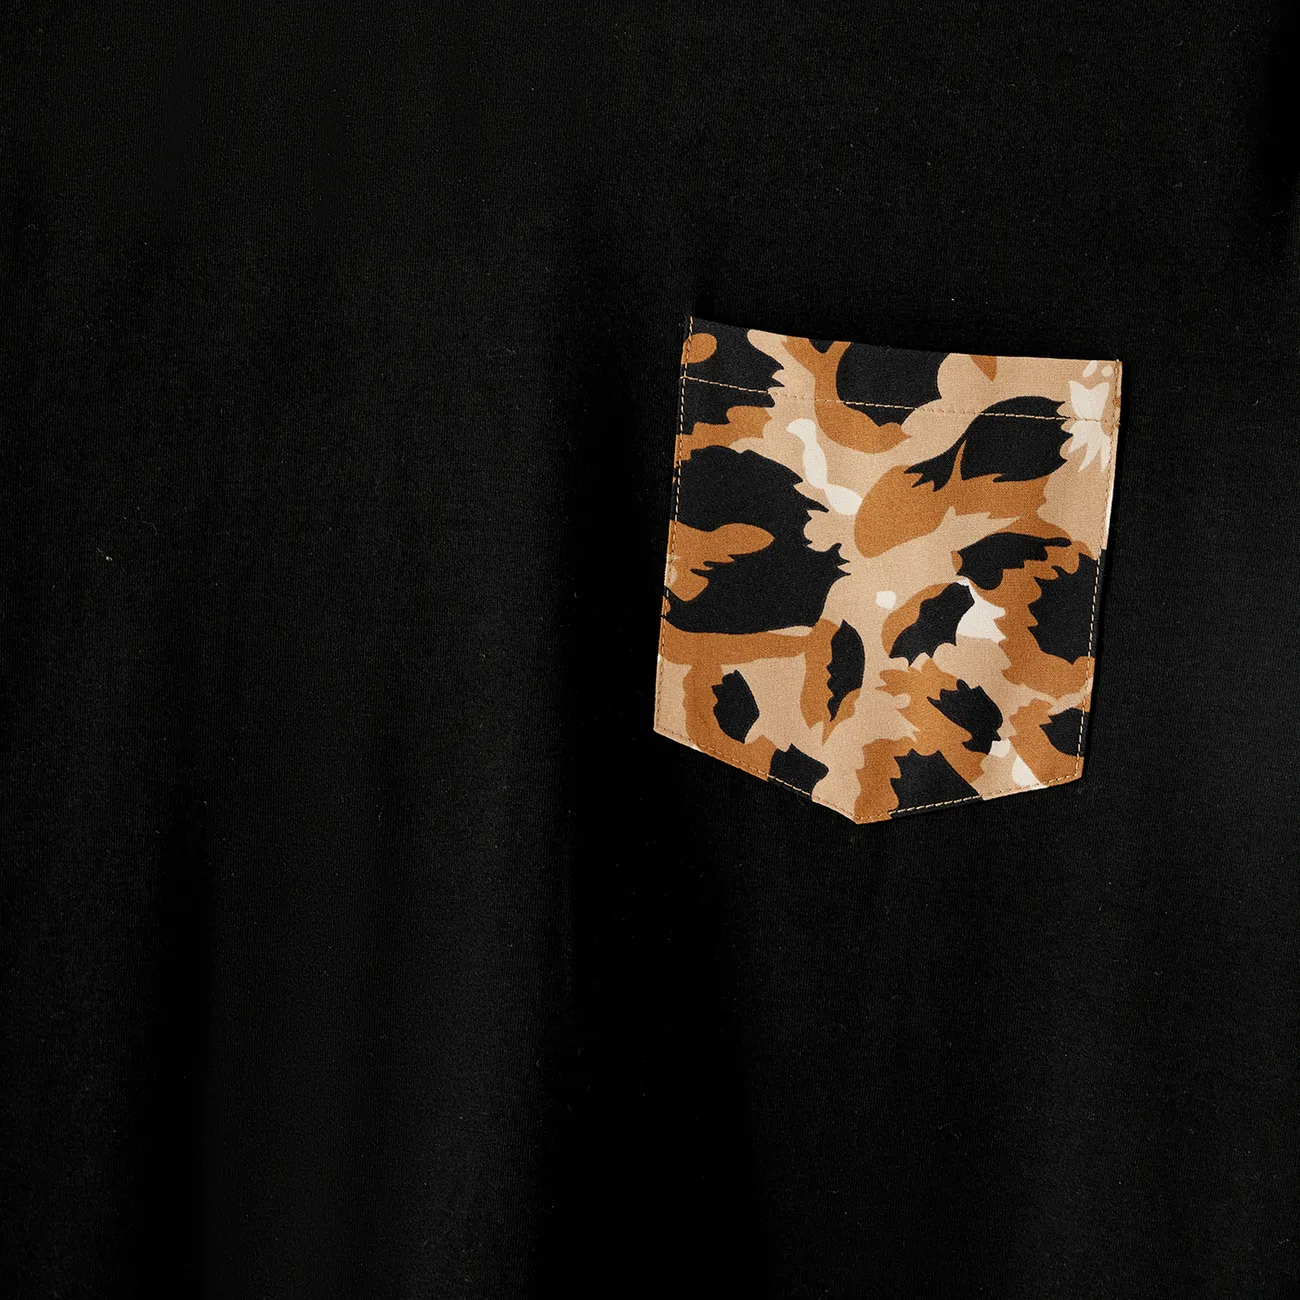 Family Matching Cotton Black Short-sleeve T-shirts and Leopard Print High Low Hem Flutter-sleeve Dresses Sets Black big image 1